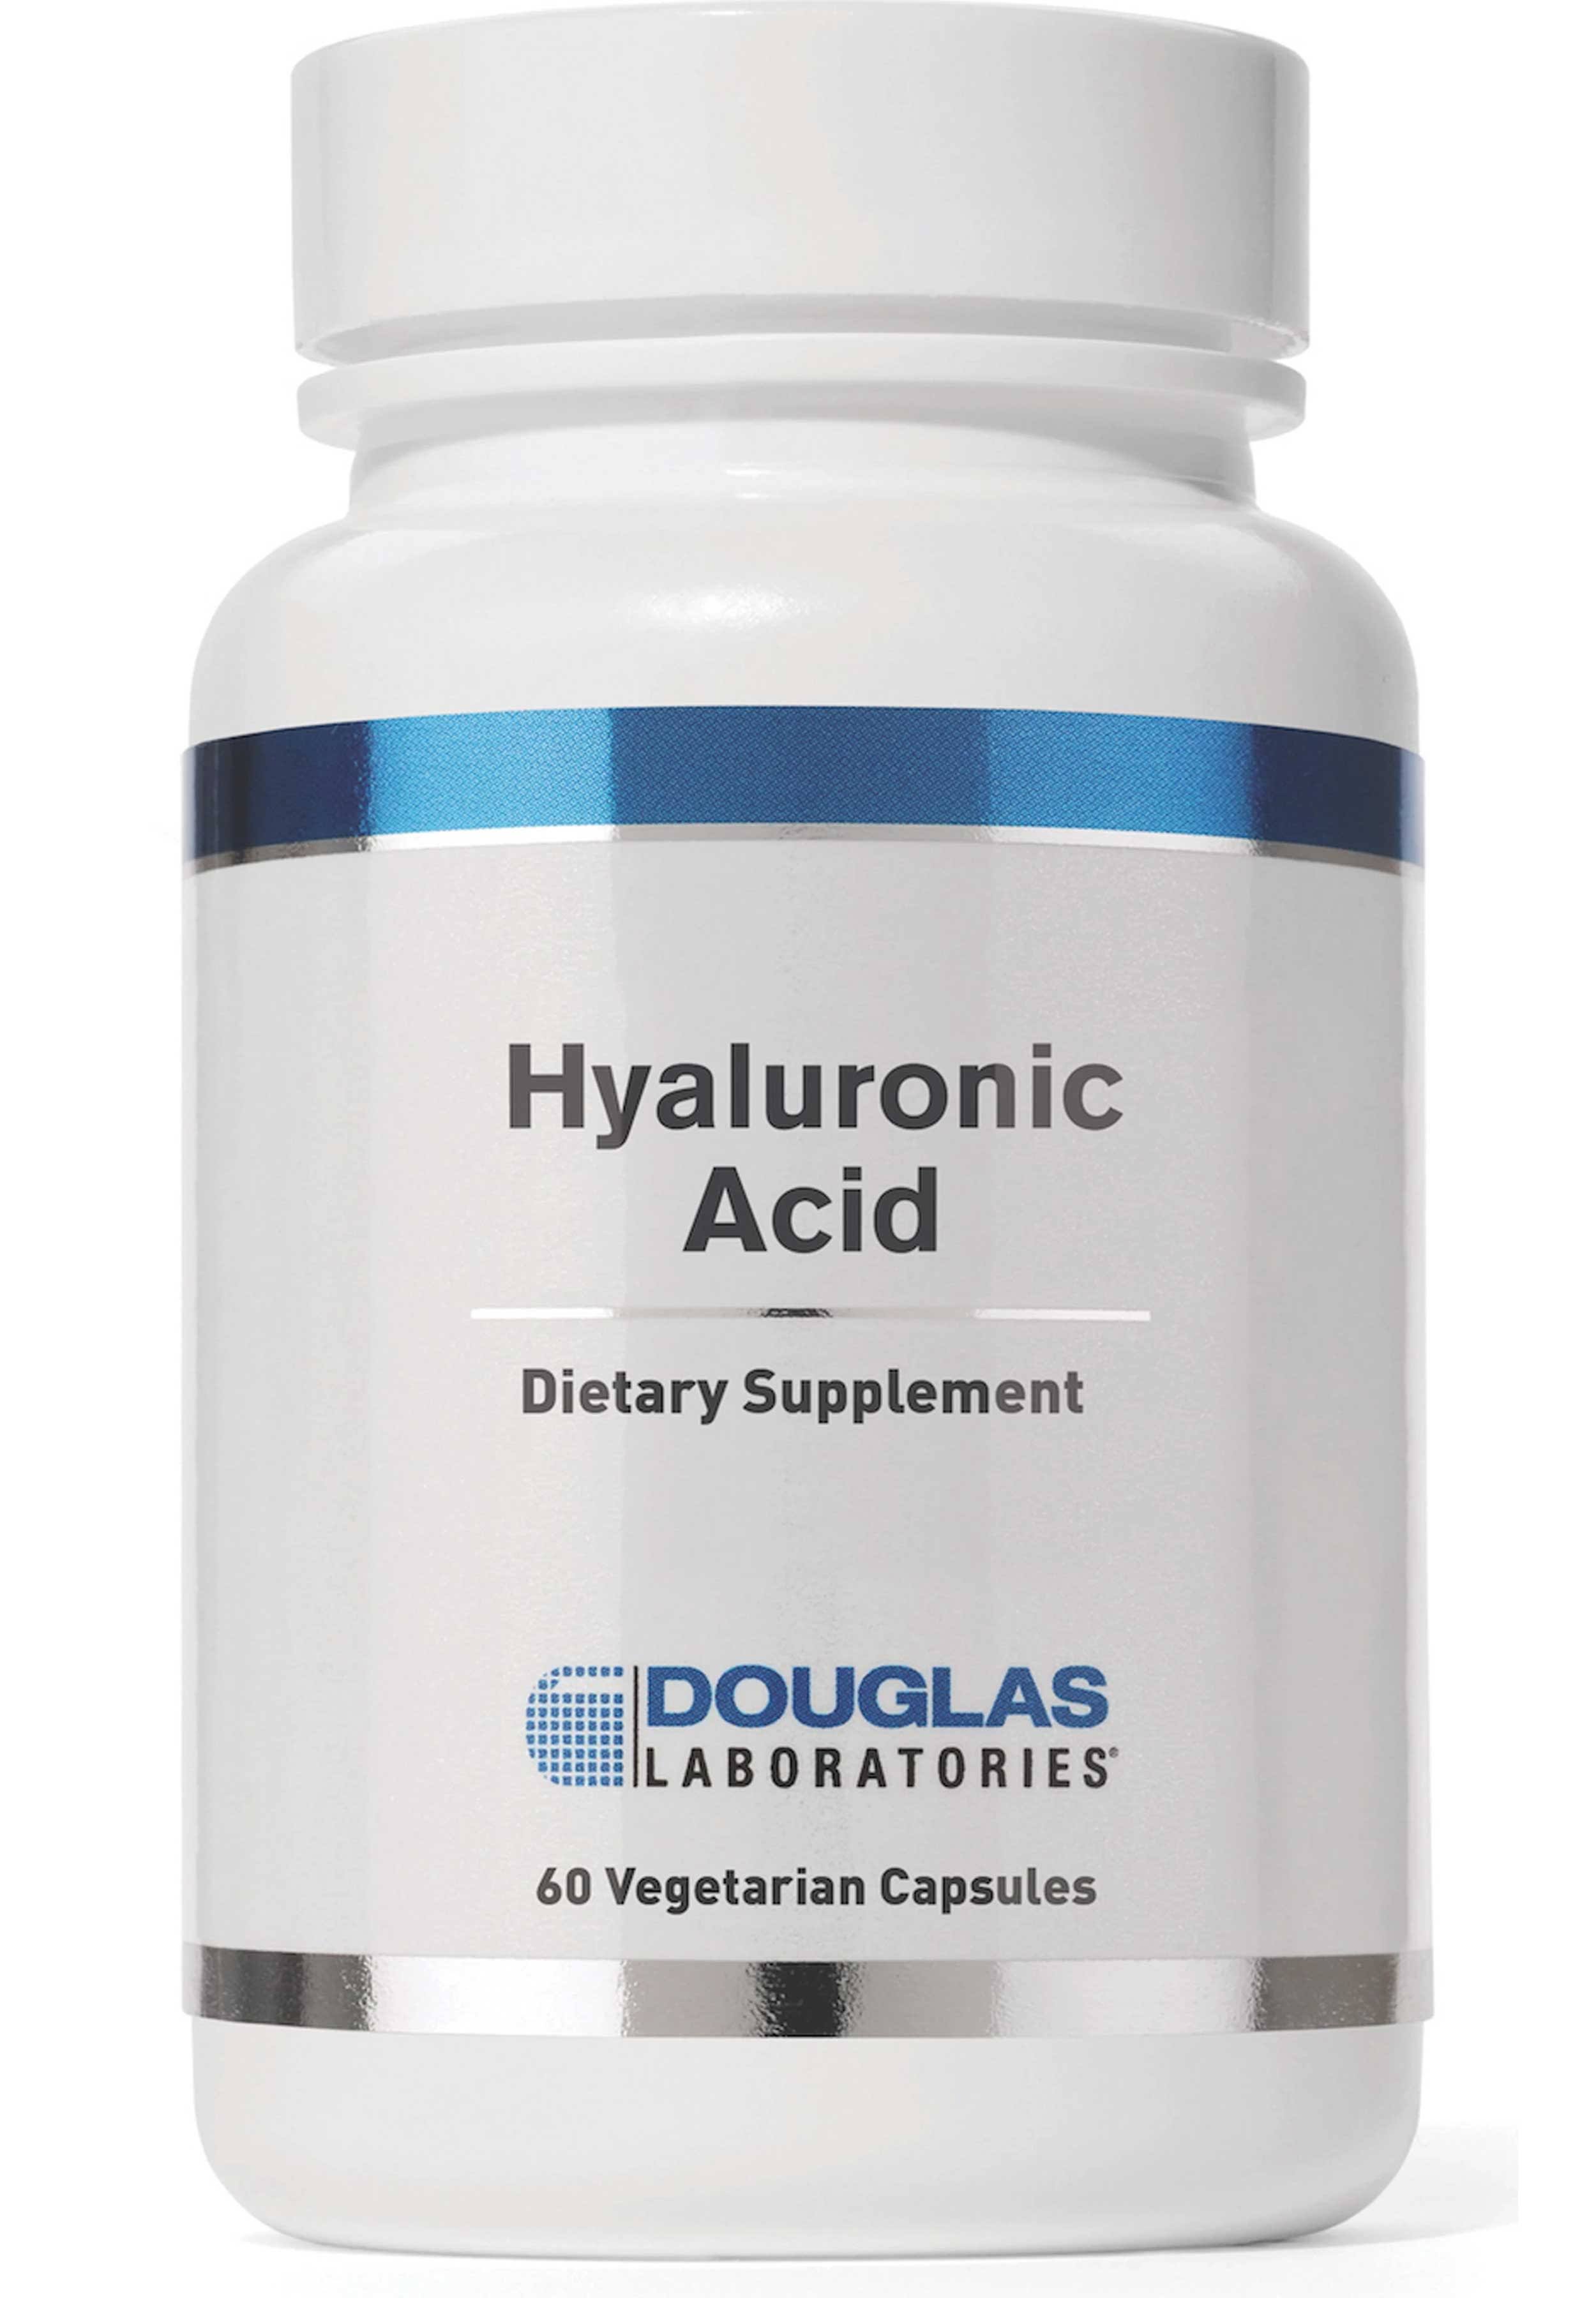 Douglas Laboratories Hyaluronic Acid - 60 Vegetarian Capsules